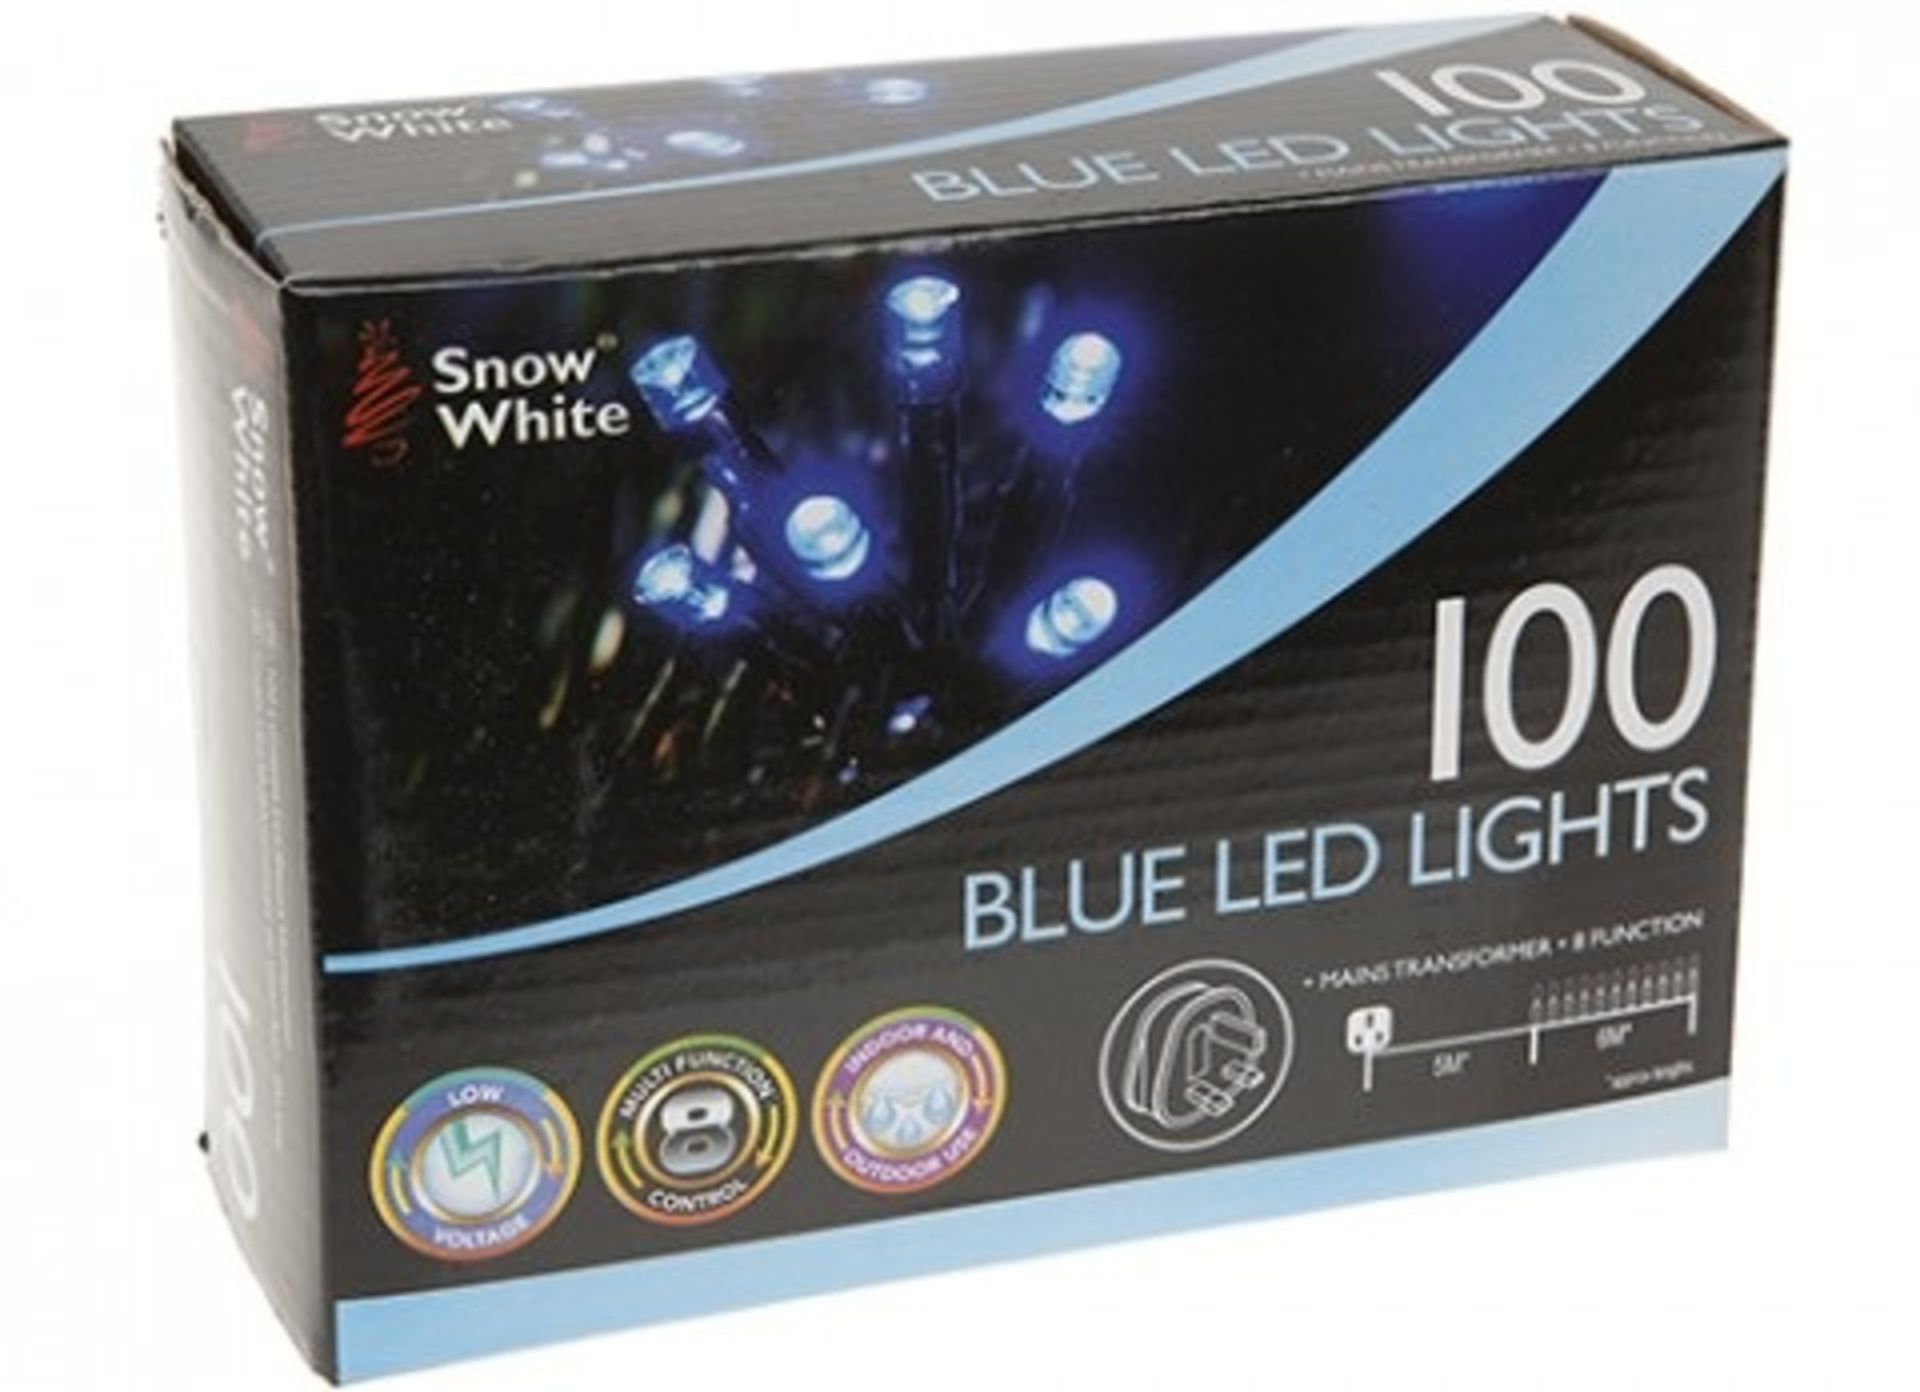 V Brand New 100 Blue LED Lights - Mains Transformer - Eight Function